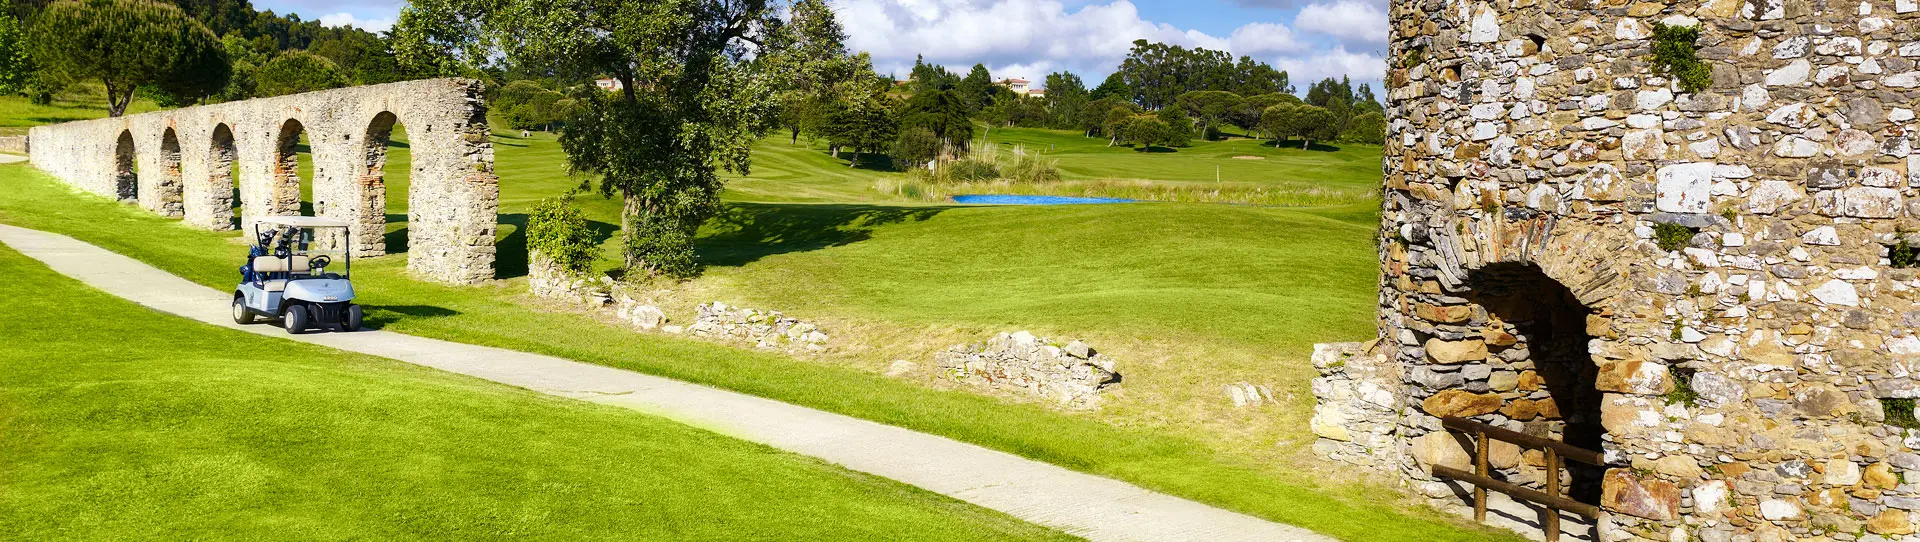 Portugal golf courses - Penha Longa Atlantic Championship - Photo 3